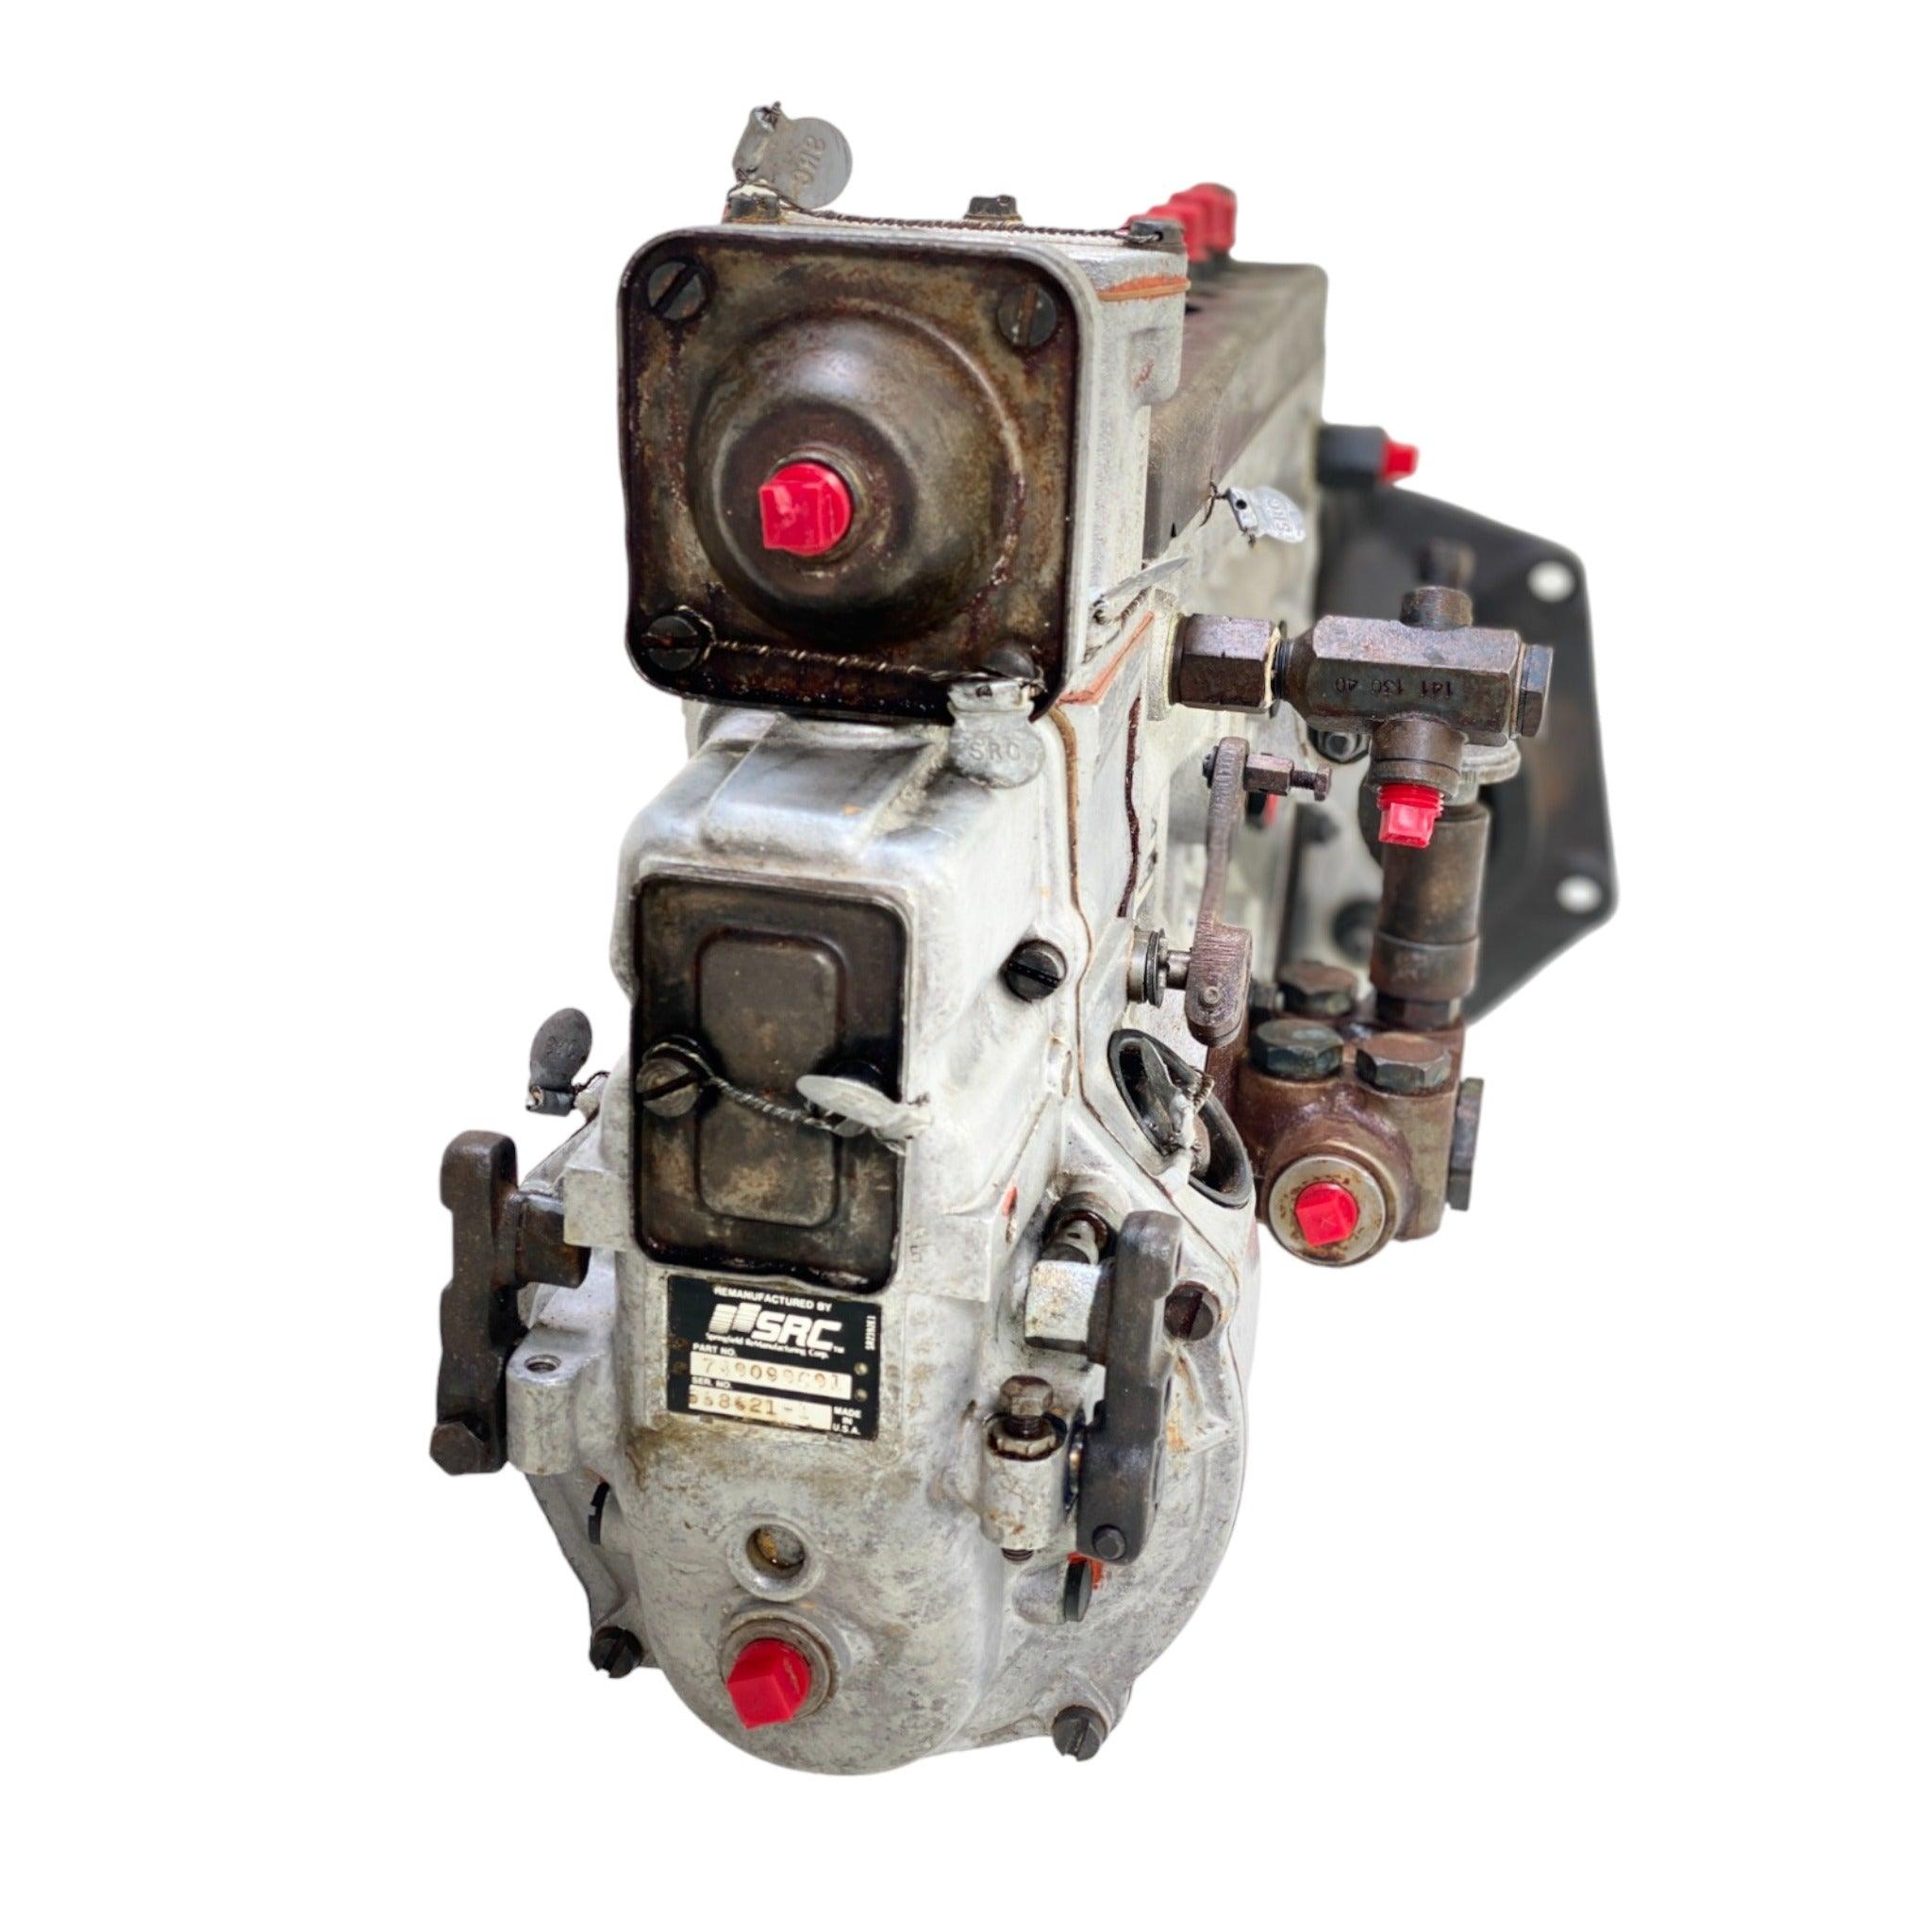 749099C91 Bosch/Src 8Cyl Fuel Injection Pump For International Dvt800 Dv800 - ADVANCED TRUCK PARTS